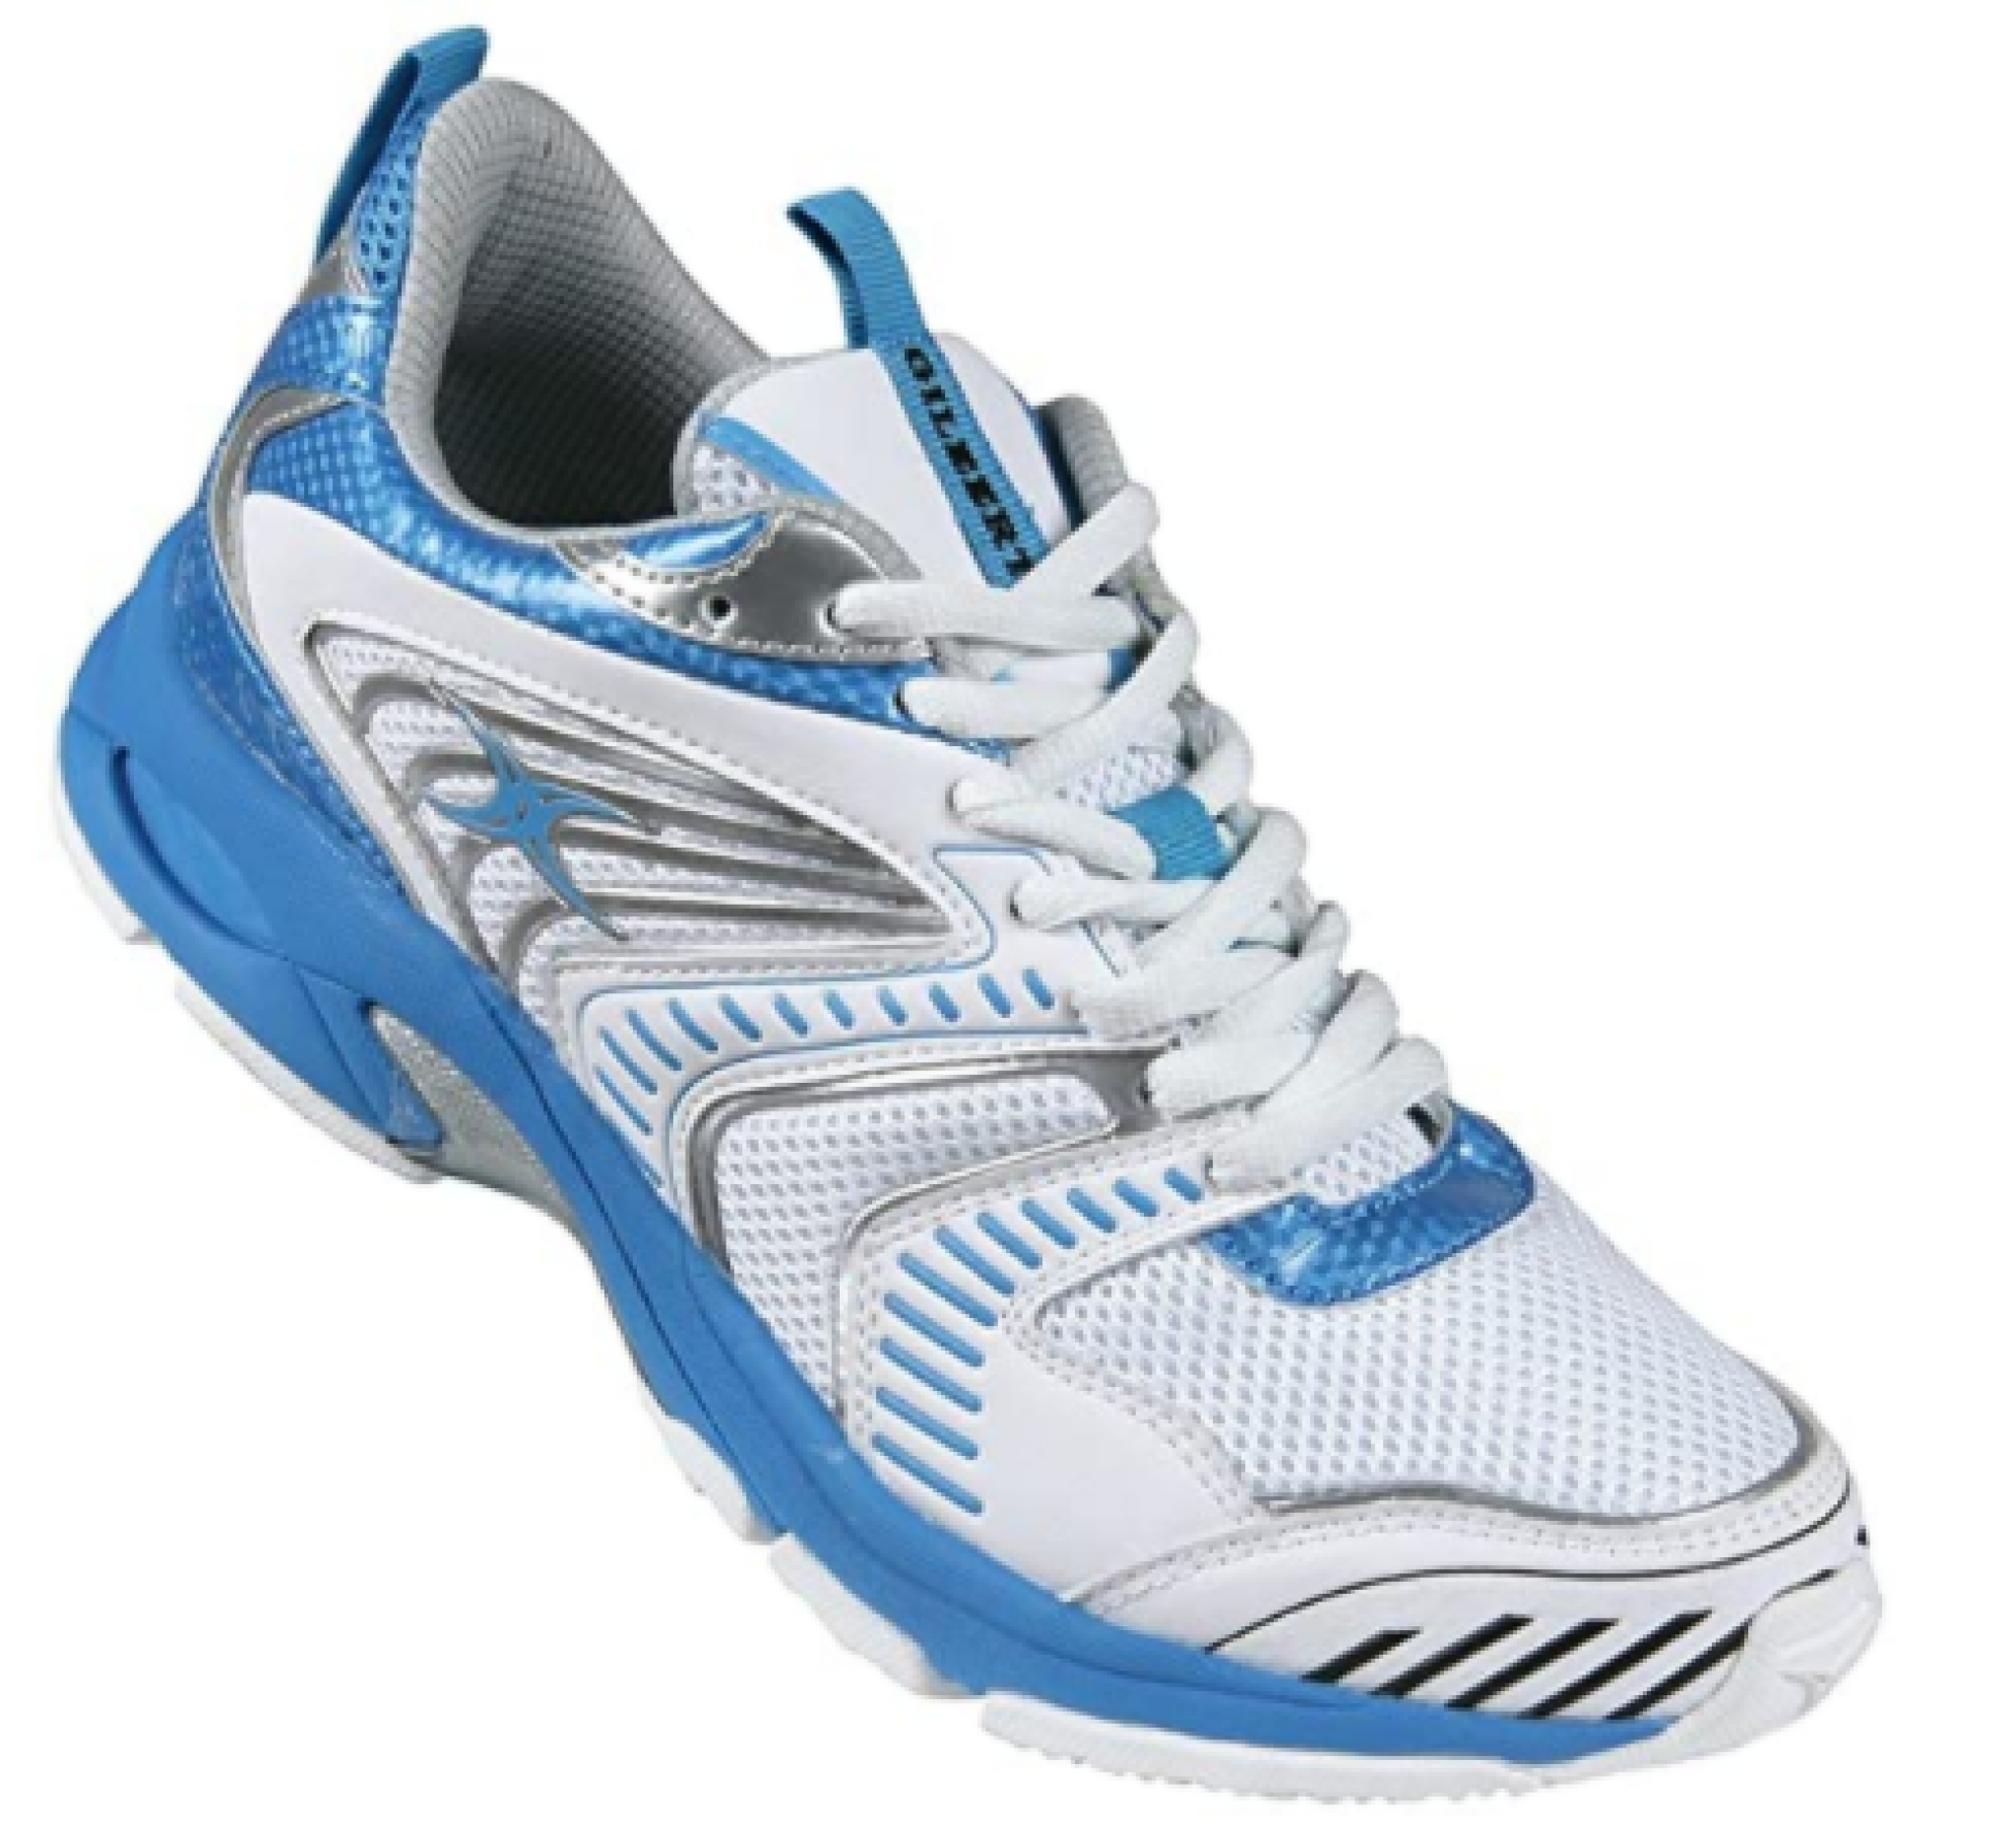 Gilbert Elite Netball Trainers Shoes 2048x1858 